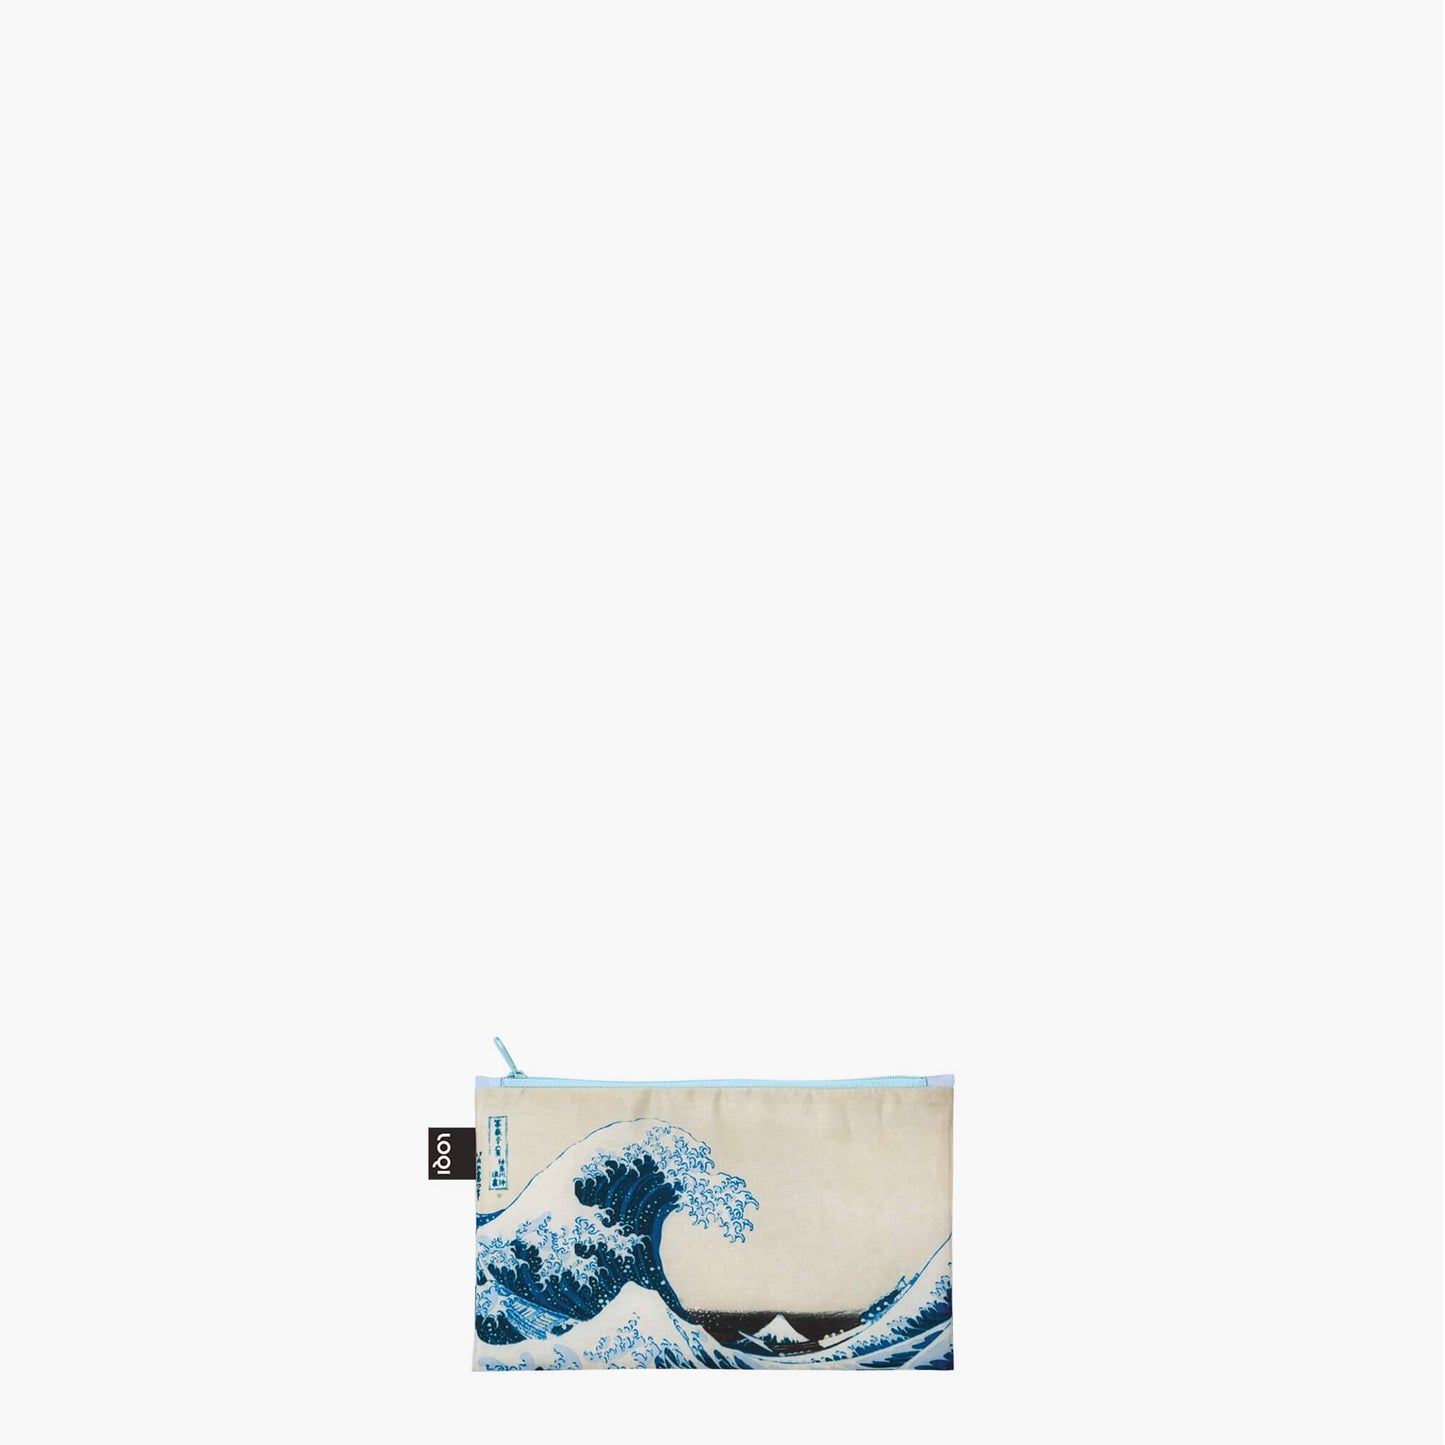 Hokusai / Hiroshige Recycled Zip Pockets (Set of 3)